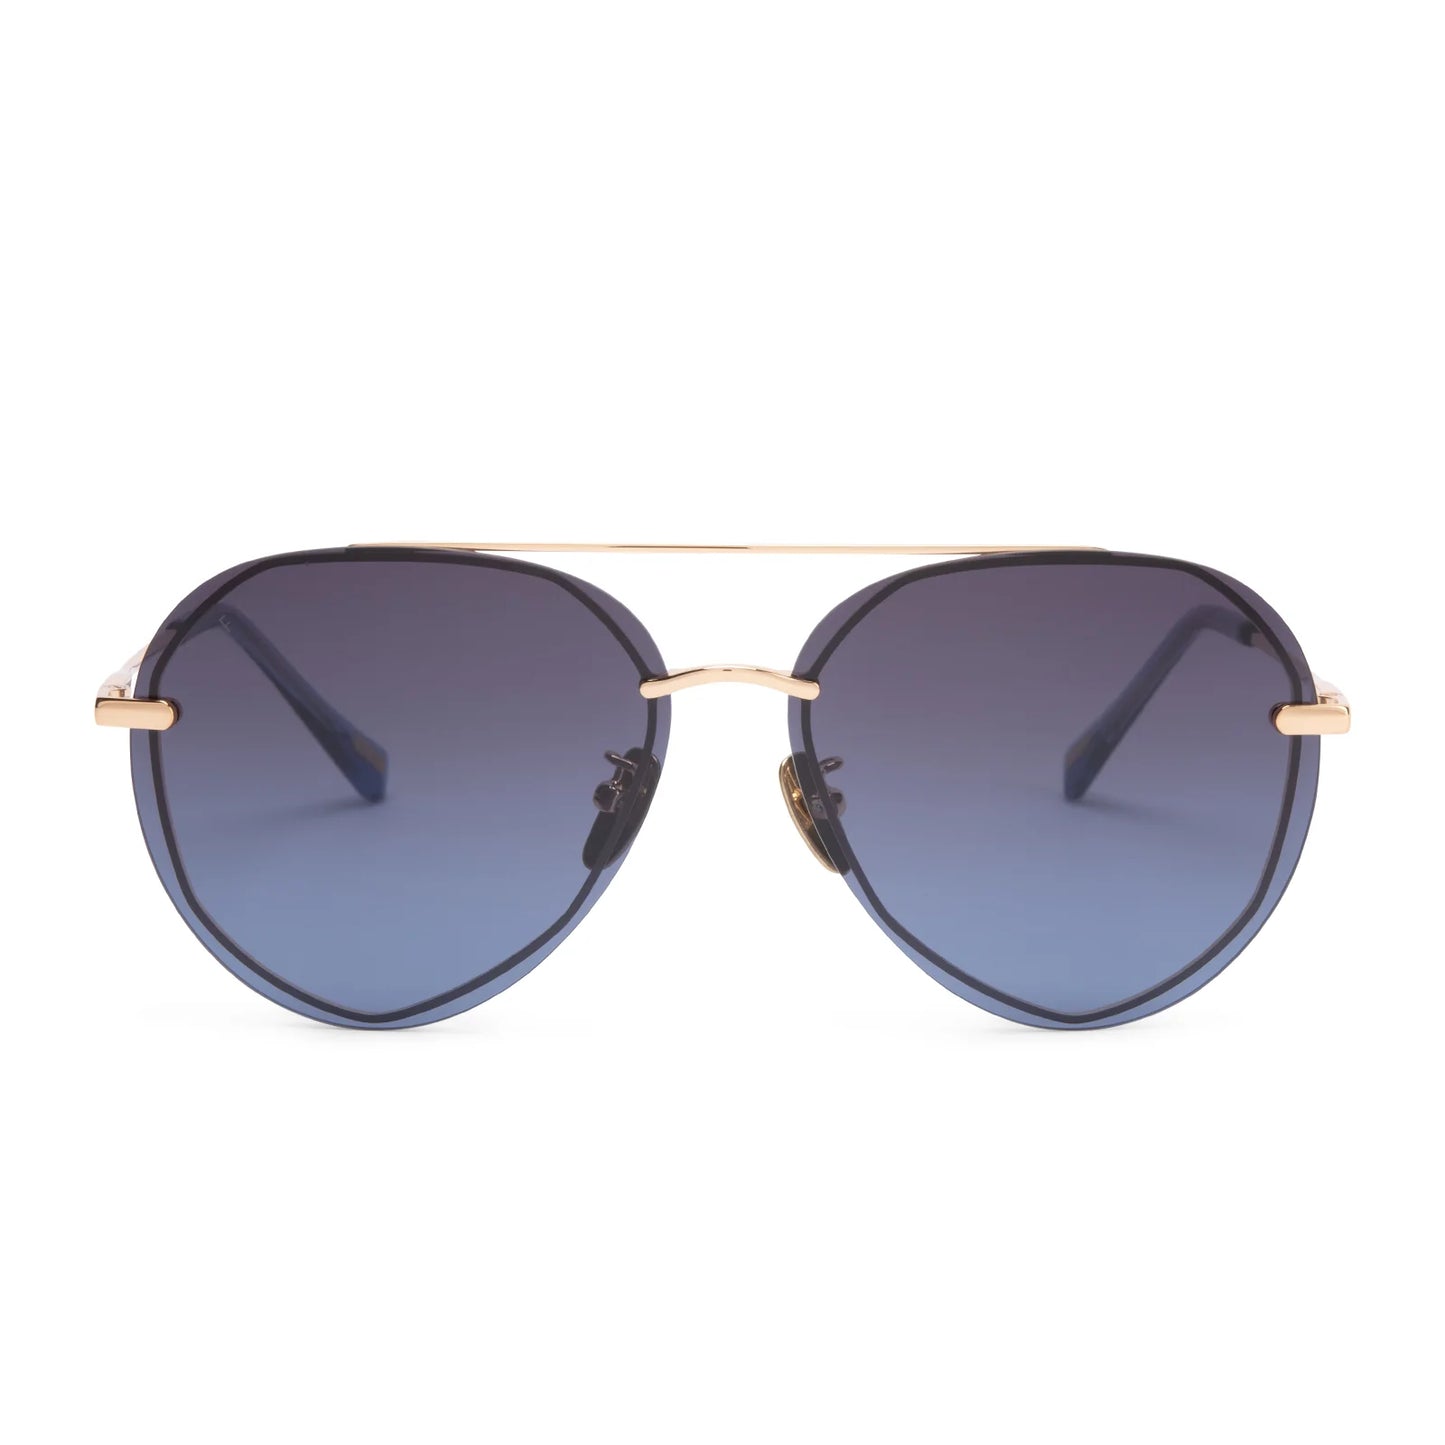 DIFF Eyewear - Lenox - Gold Blue Gradient Polarized Sunglasses